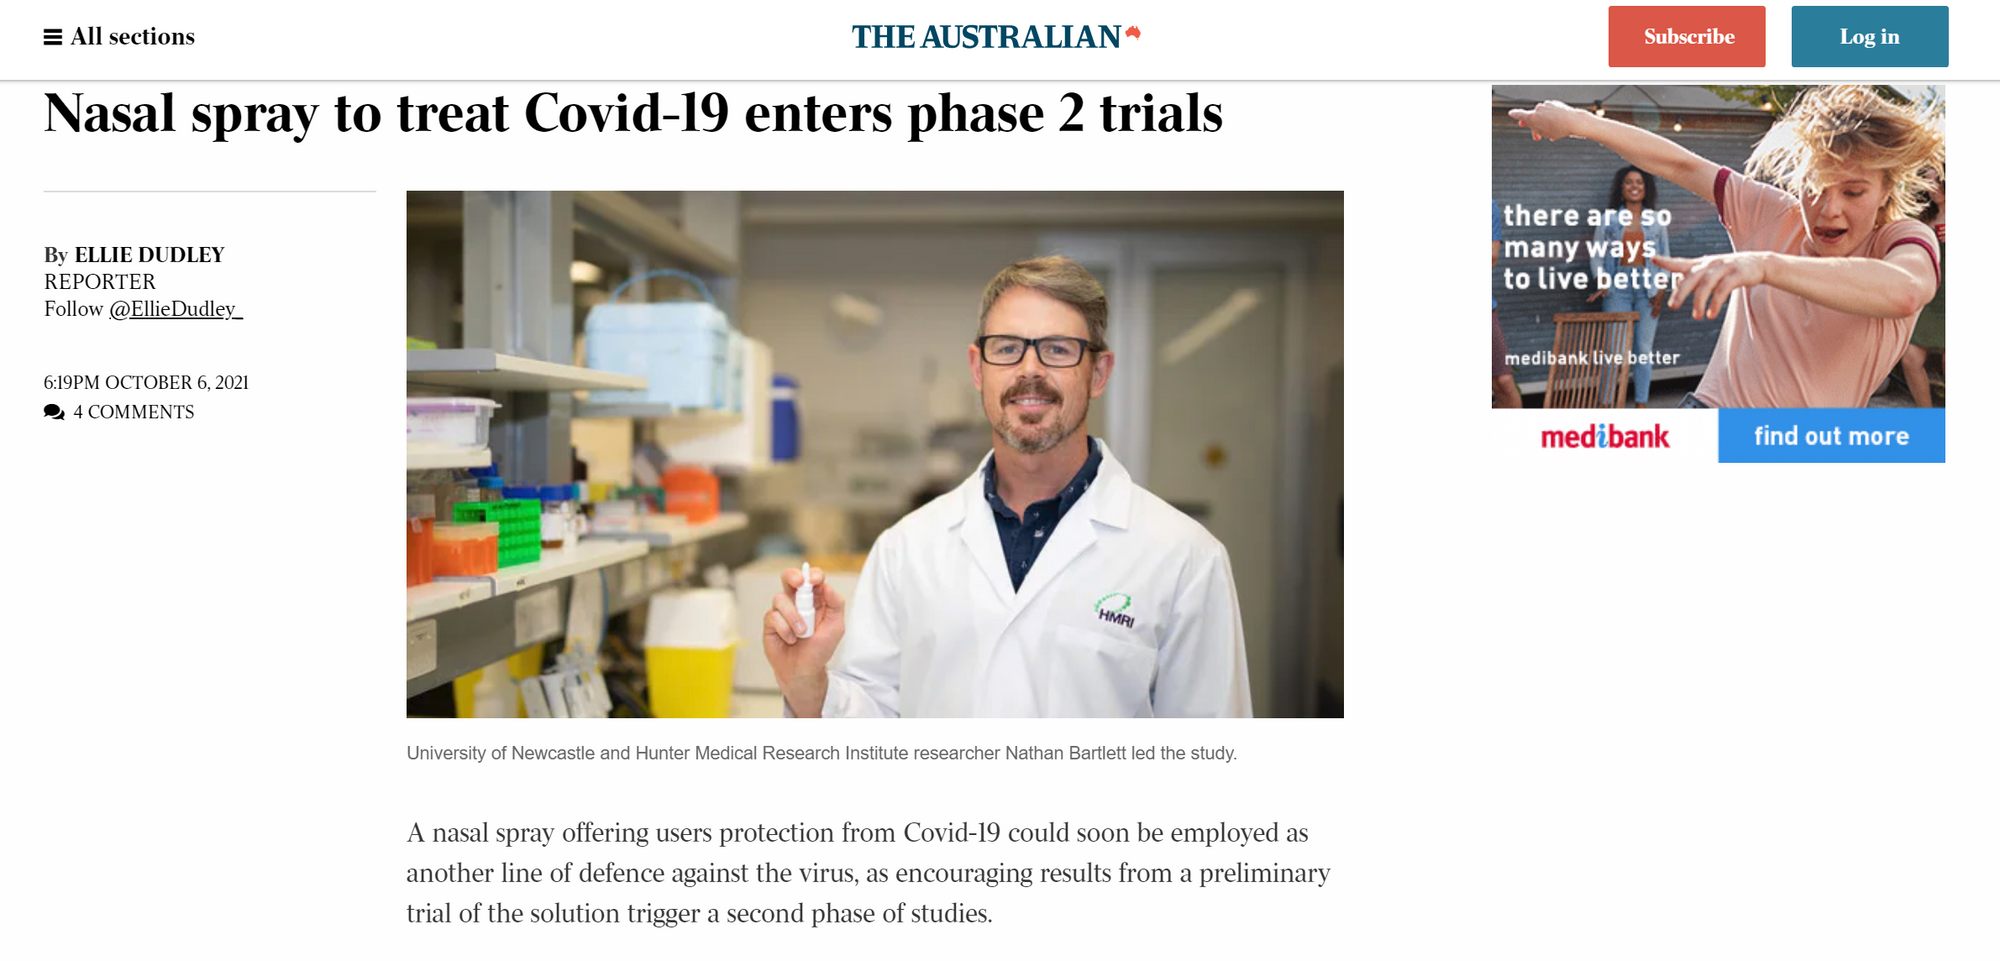 Nasal spray to treat Covid-19 enters phase 2 trials